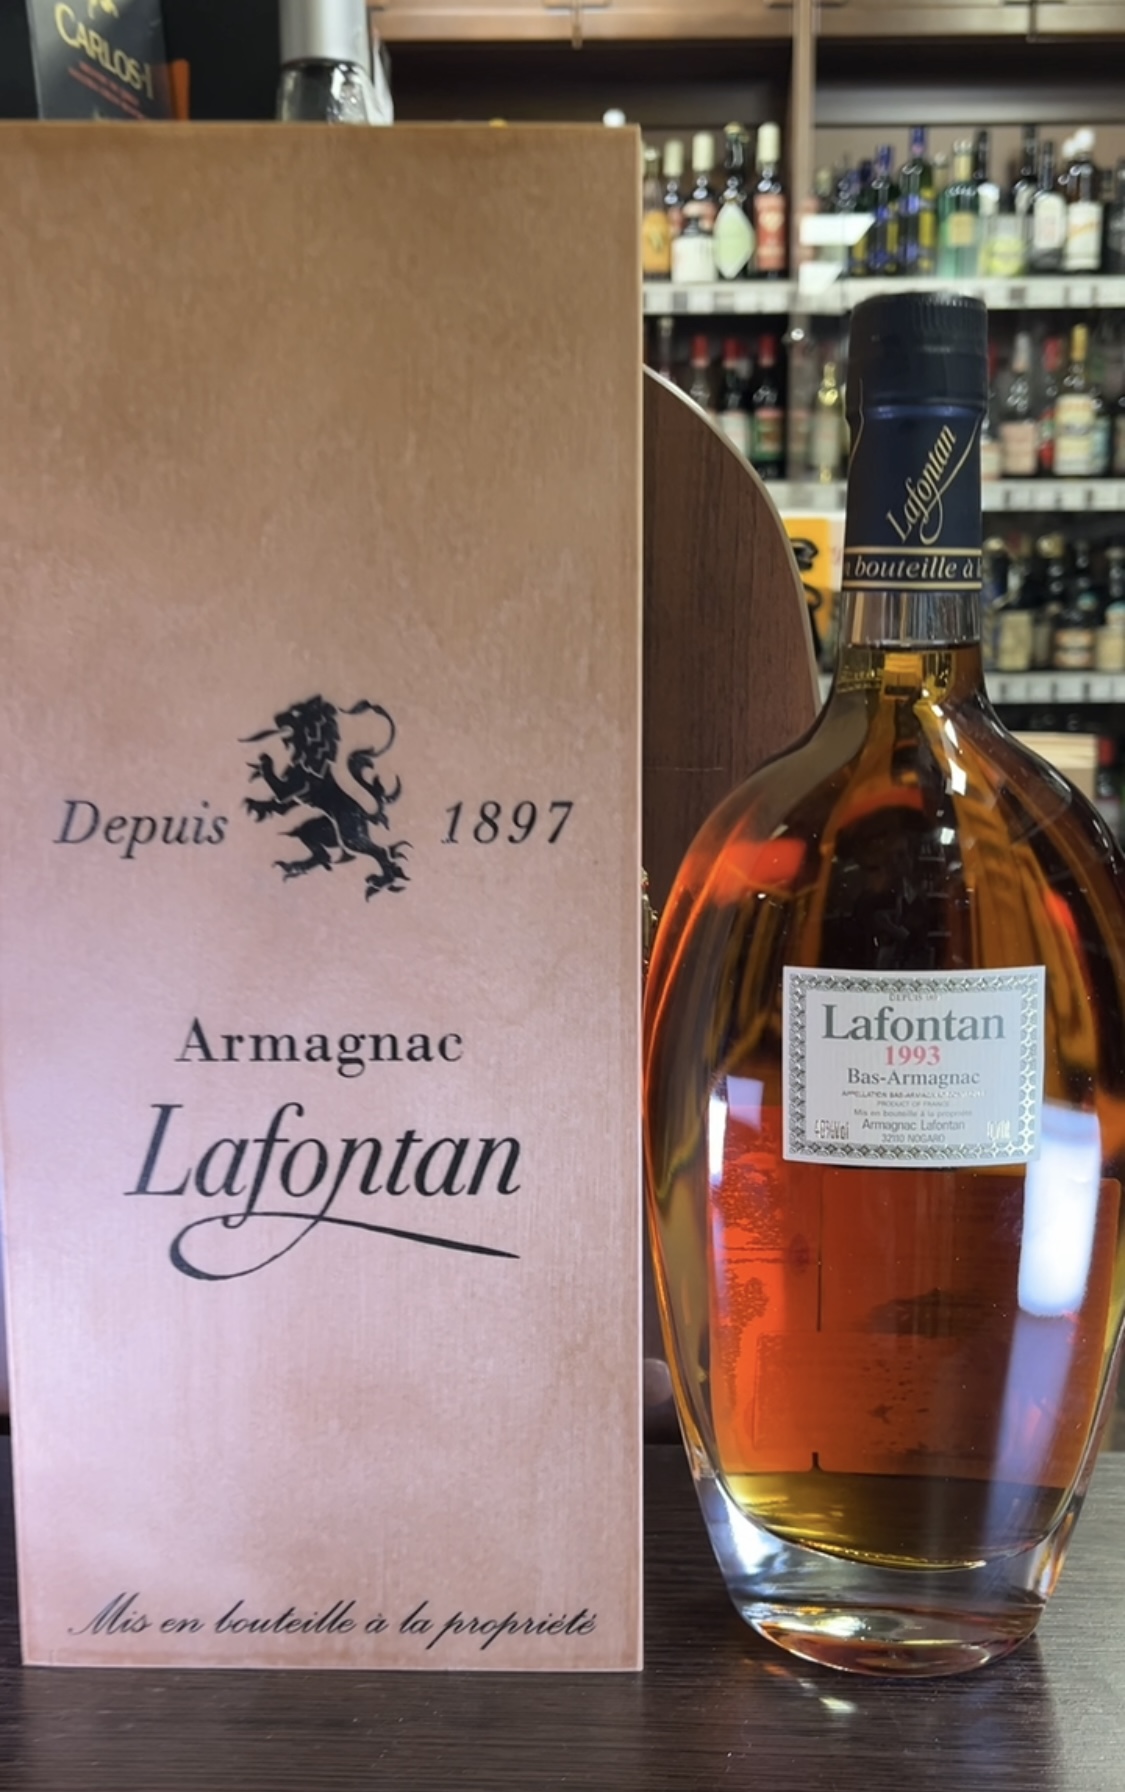 Armagnac Lafontan 1993 years Арманьяк Лафонтан 1993г 0.7л